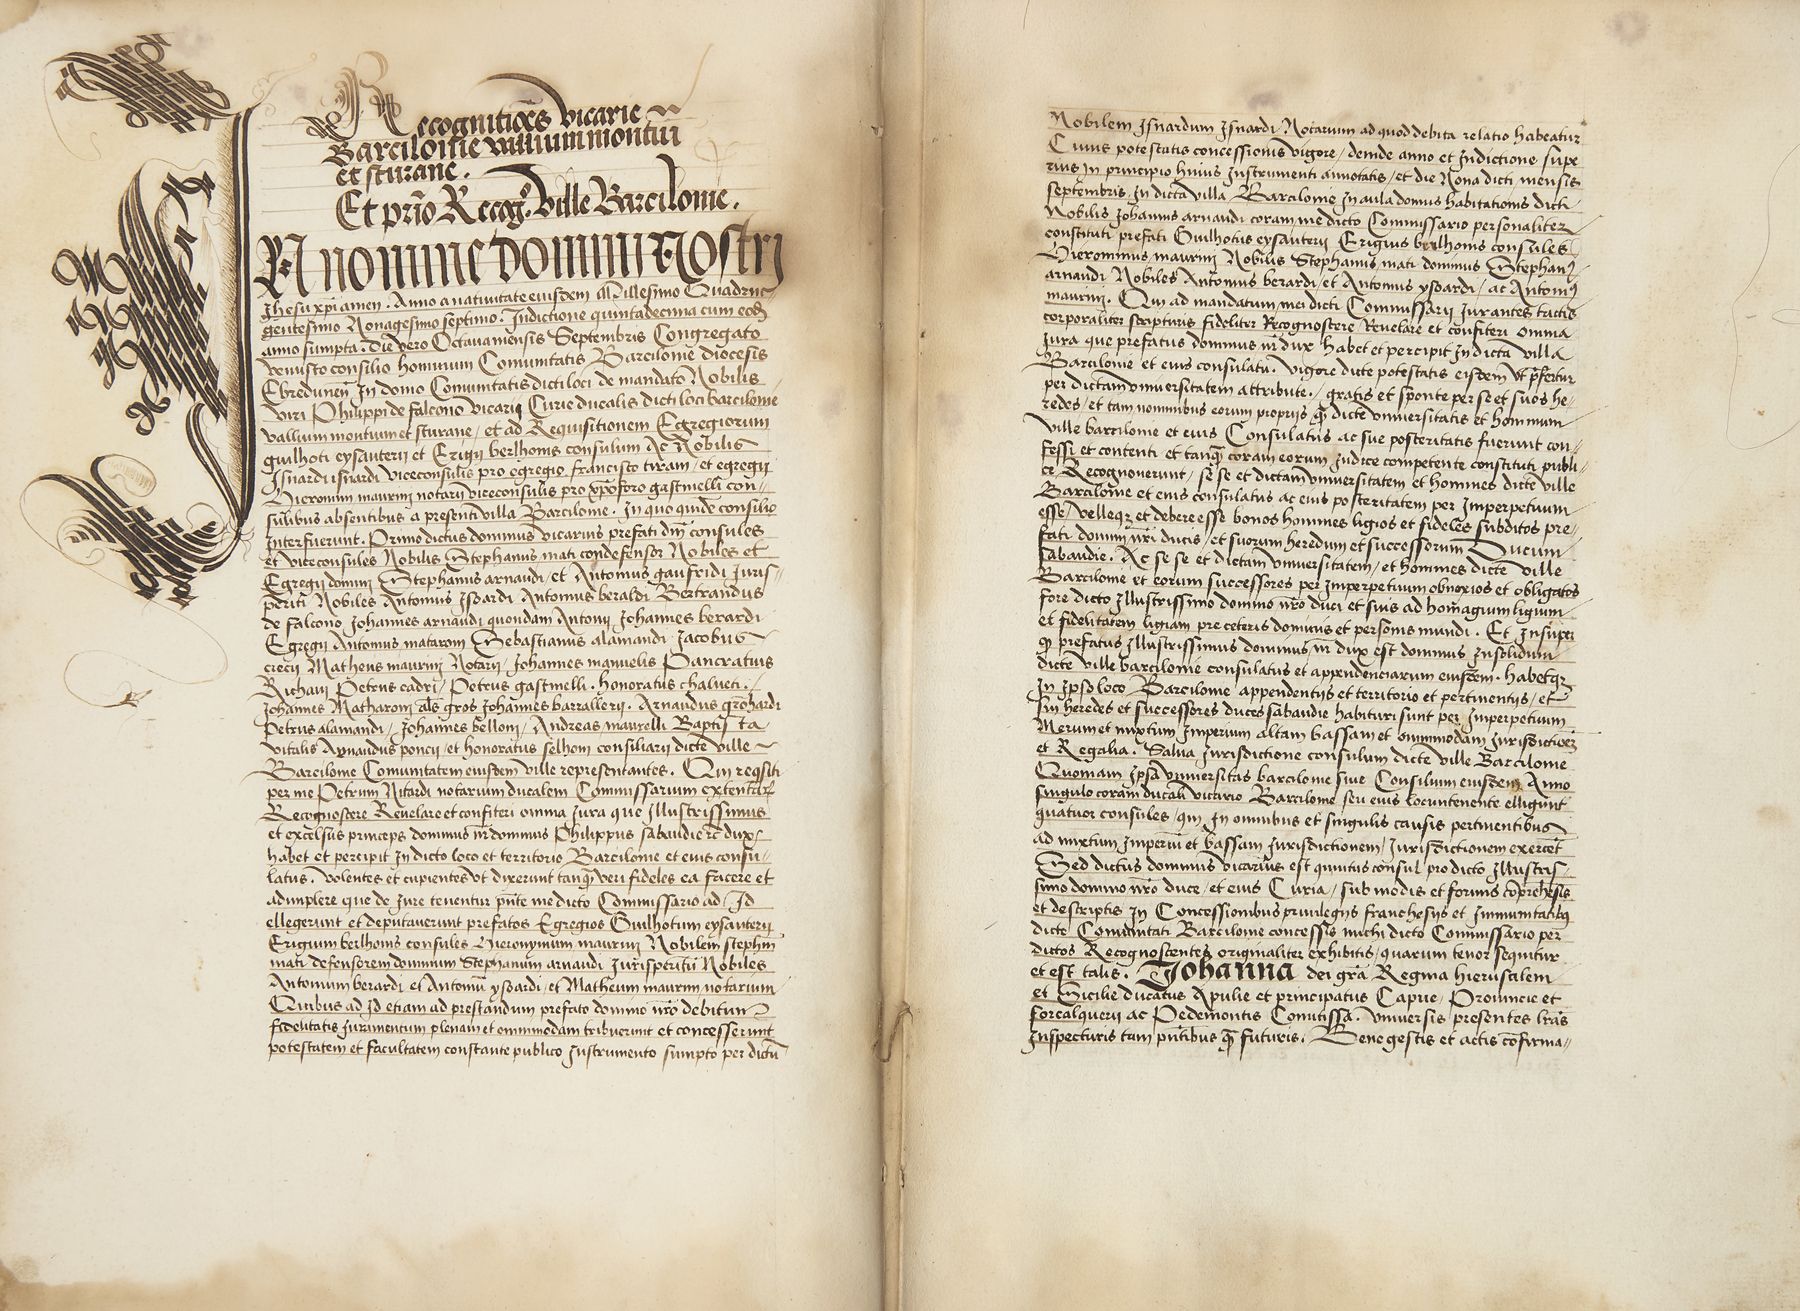 Null [MANOSCRITTO NOTARILE] - 1497年的手写本在副本中。1497.

这是一份早期的纸质手稿，涉及人口普查，或者说是个人所有者的&hellip;